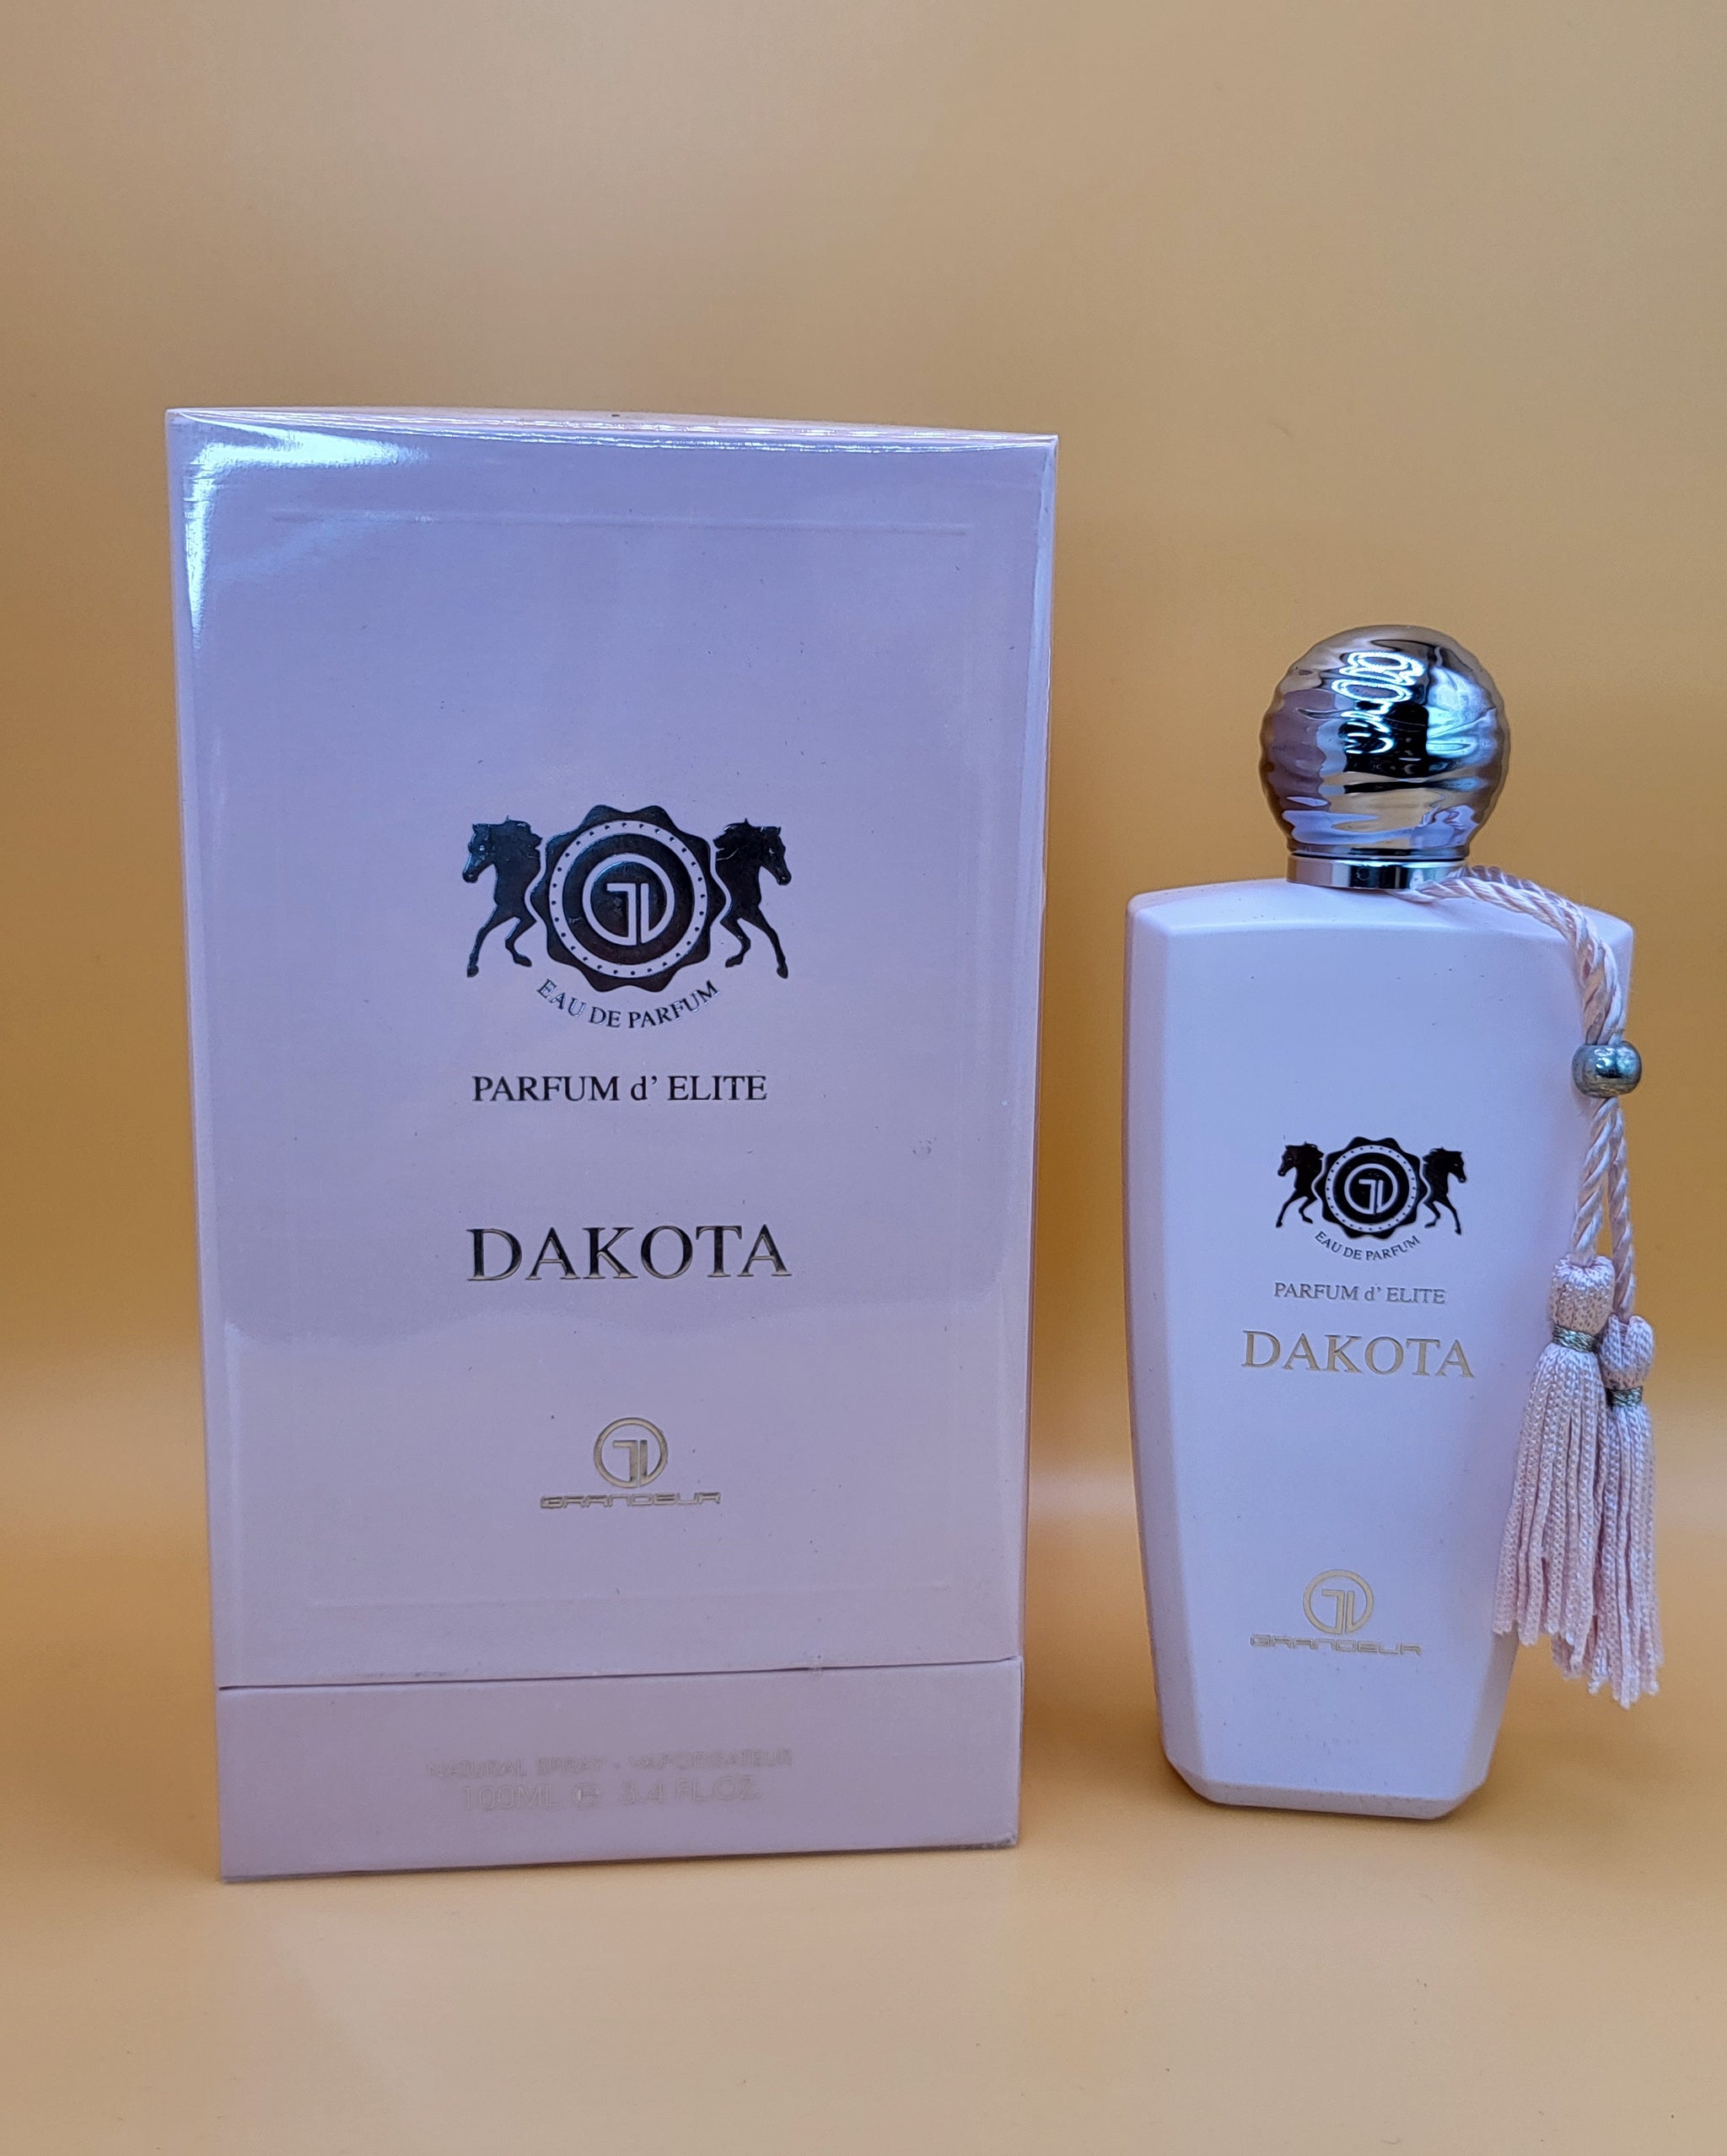 Dakota Eau De Parfum 3.4 oz - 100 ML: Grandeur's Timeless Fragrance for Women